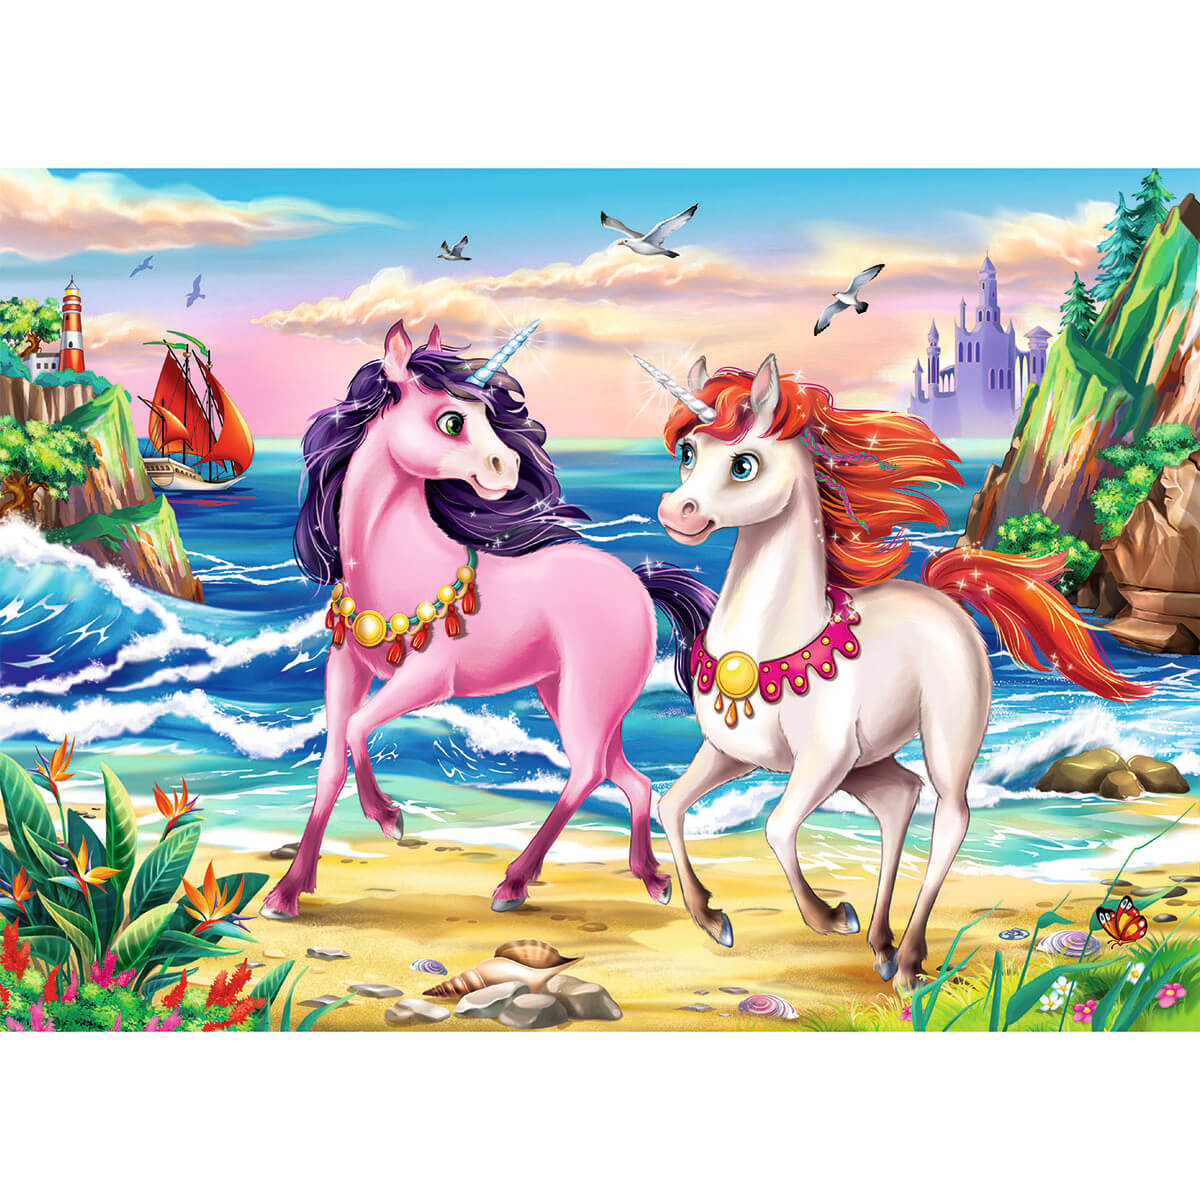 Ravensburger Beach Unicorns 35 Piece Puzzle